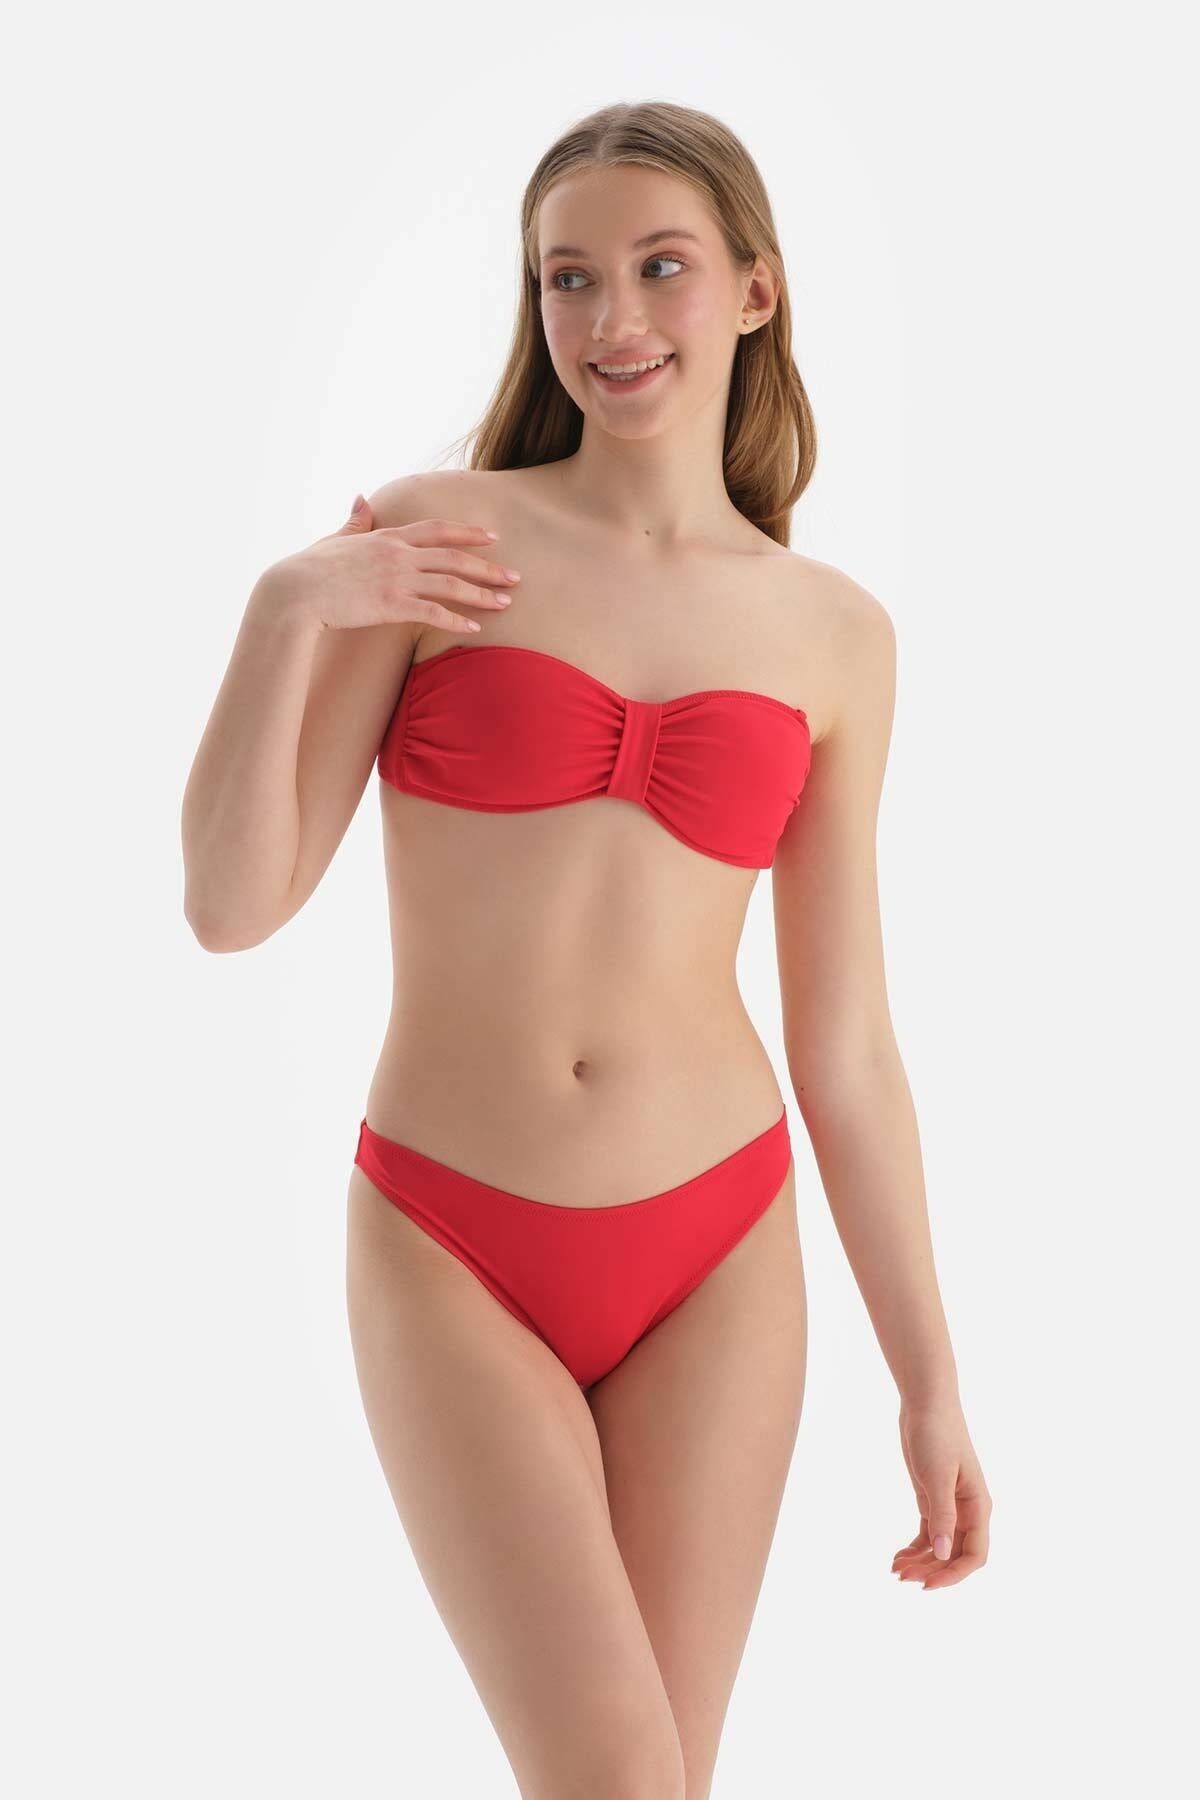 aaron peifer recommends young bikini slips pic